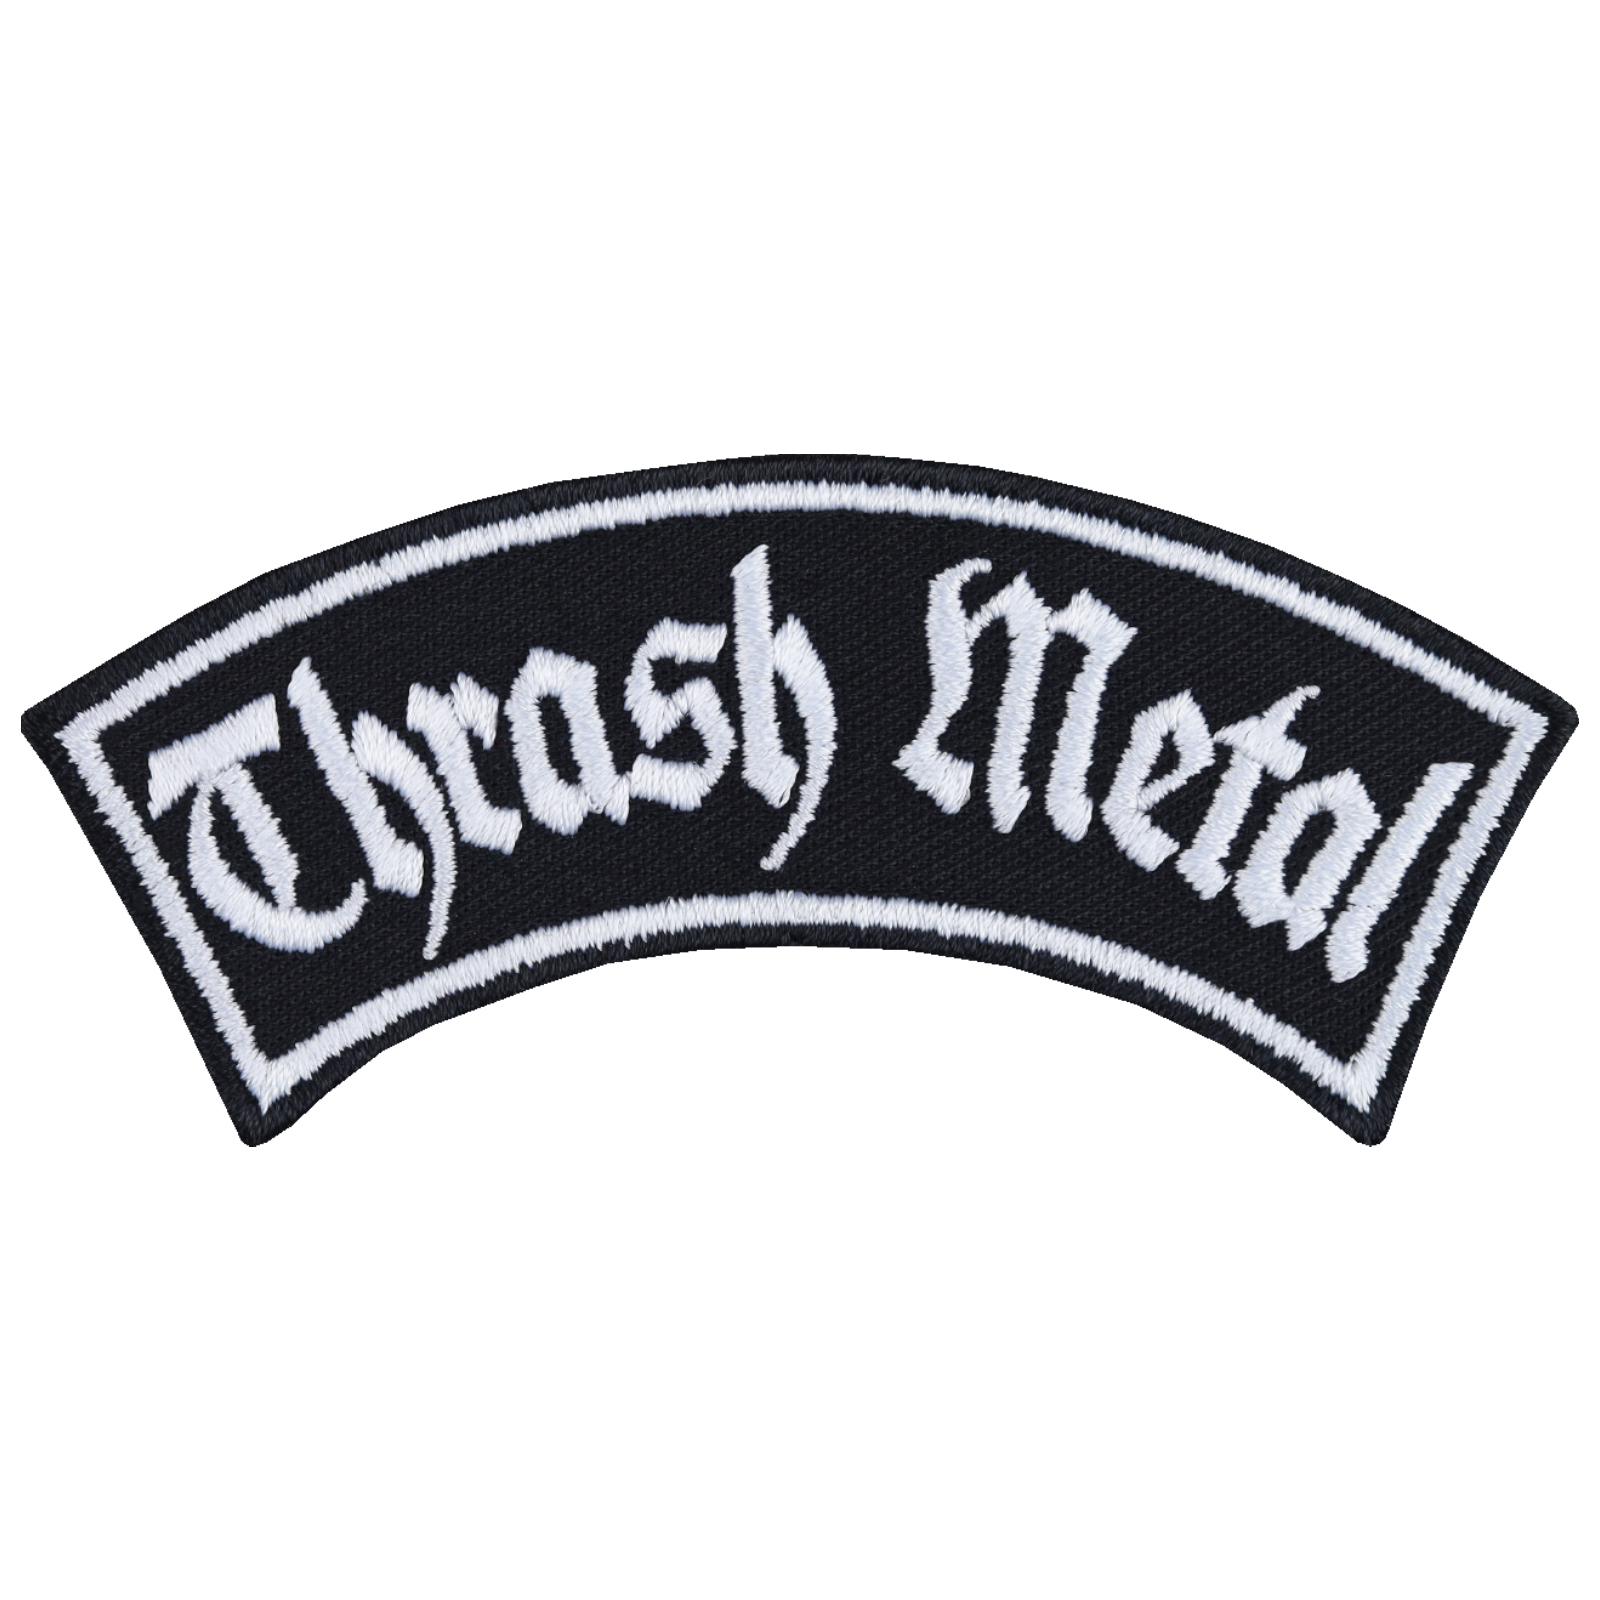 Thrash Metal - Patch